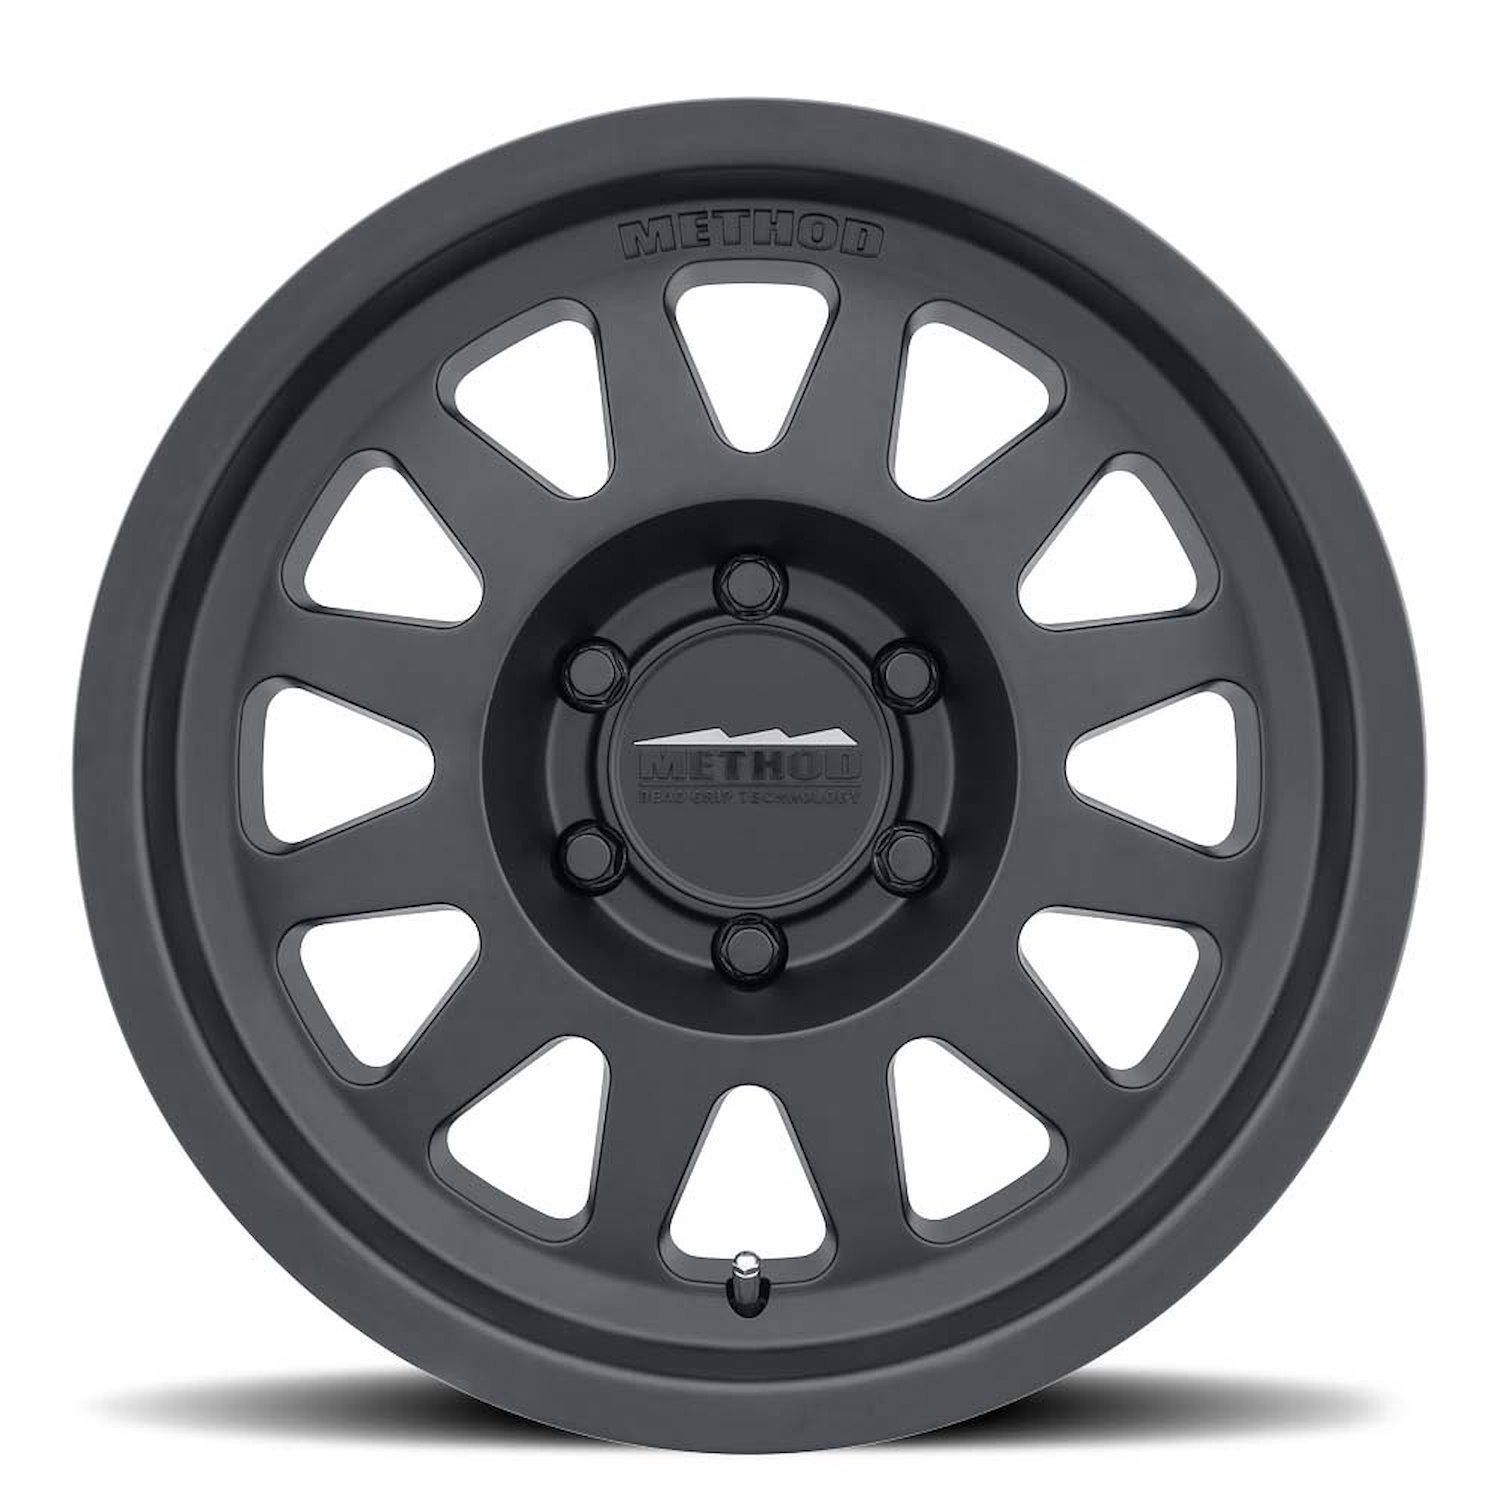 MR70468060500 TRAIL MR704 Bead Grip Wheel [Size: 16" x 8"] Matte Black